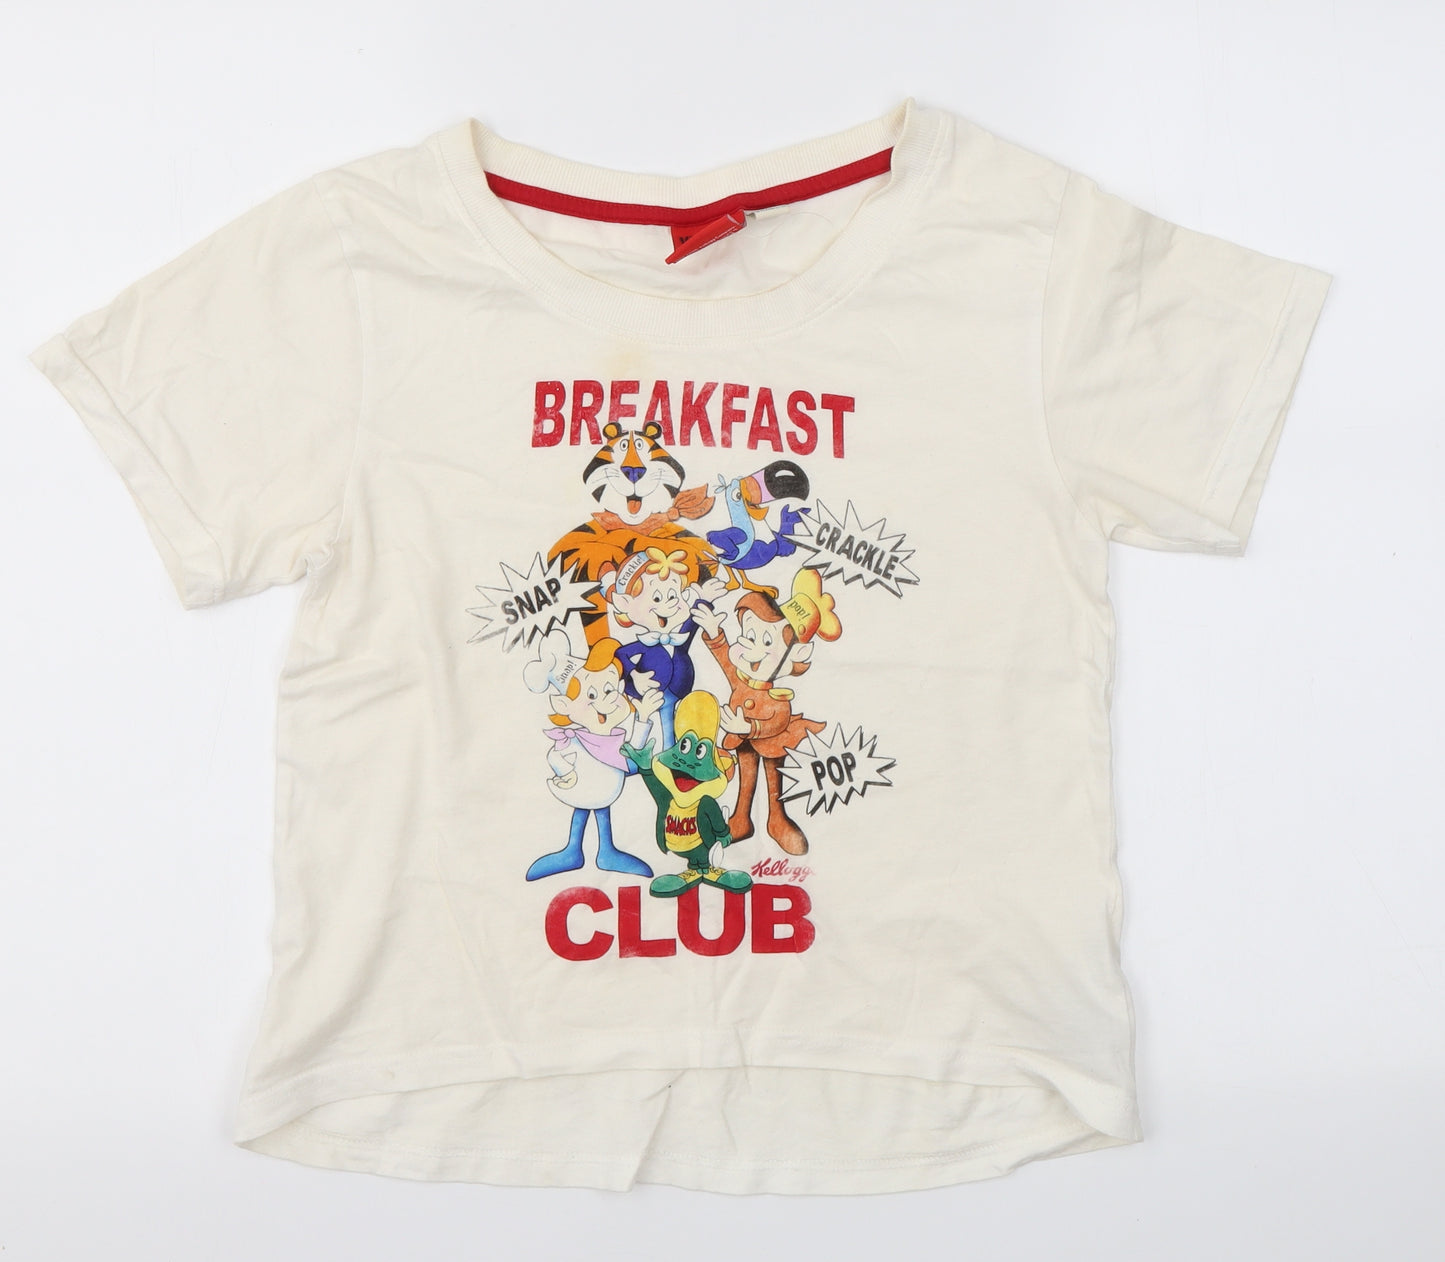 Primark Womens Multicoloured Solid  Top Pyjama Top Size XS  - The Breakfast club